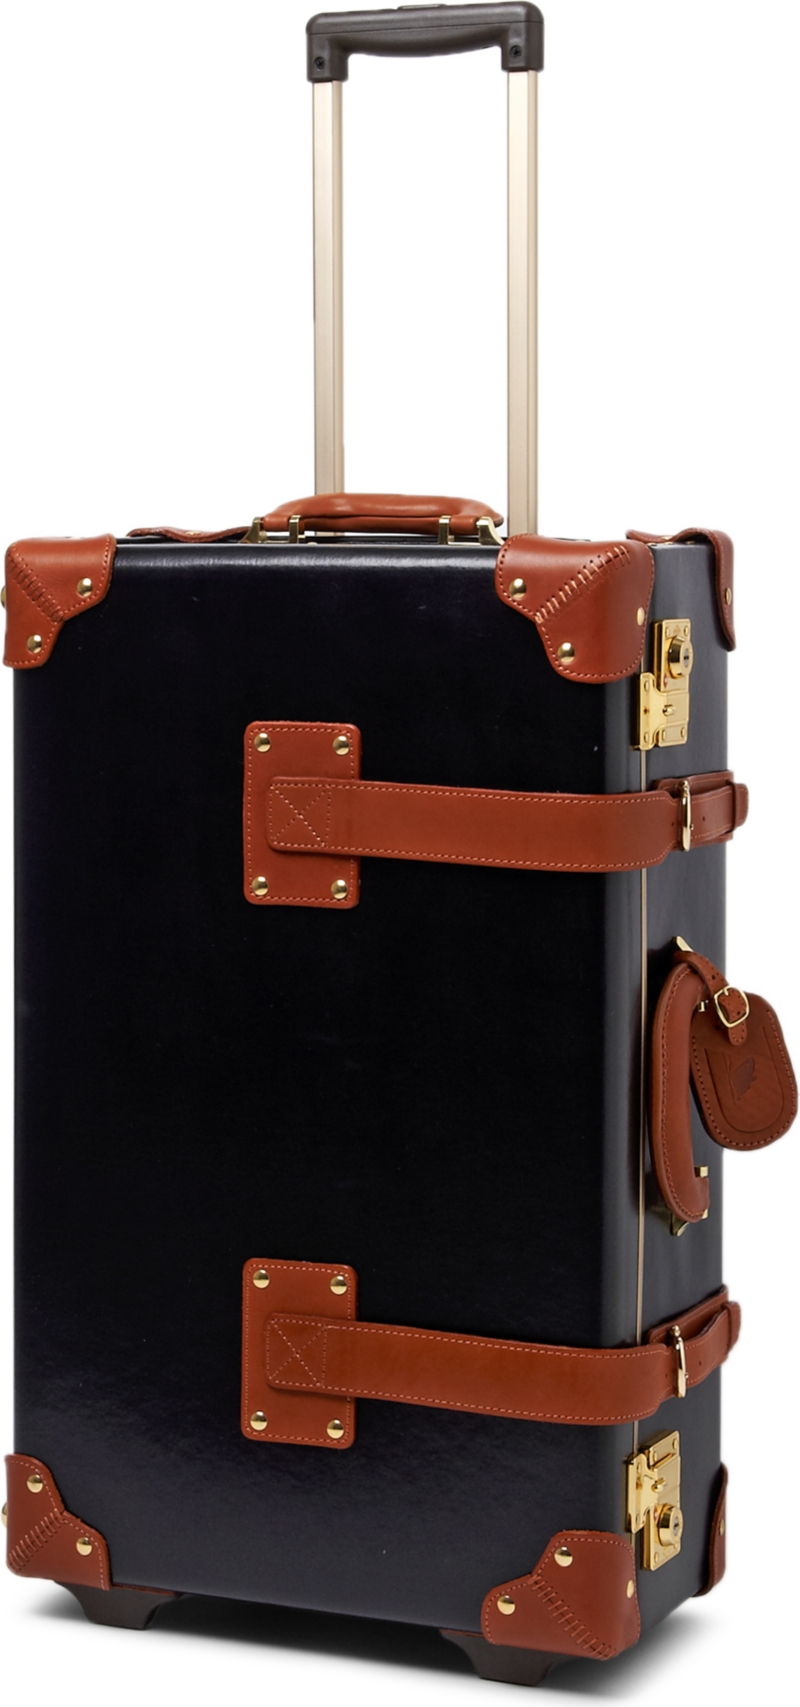 The Diplomat upright suitcase 60cm   STEAMLINE LUGGAGE   Hard